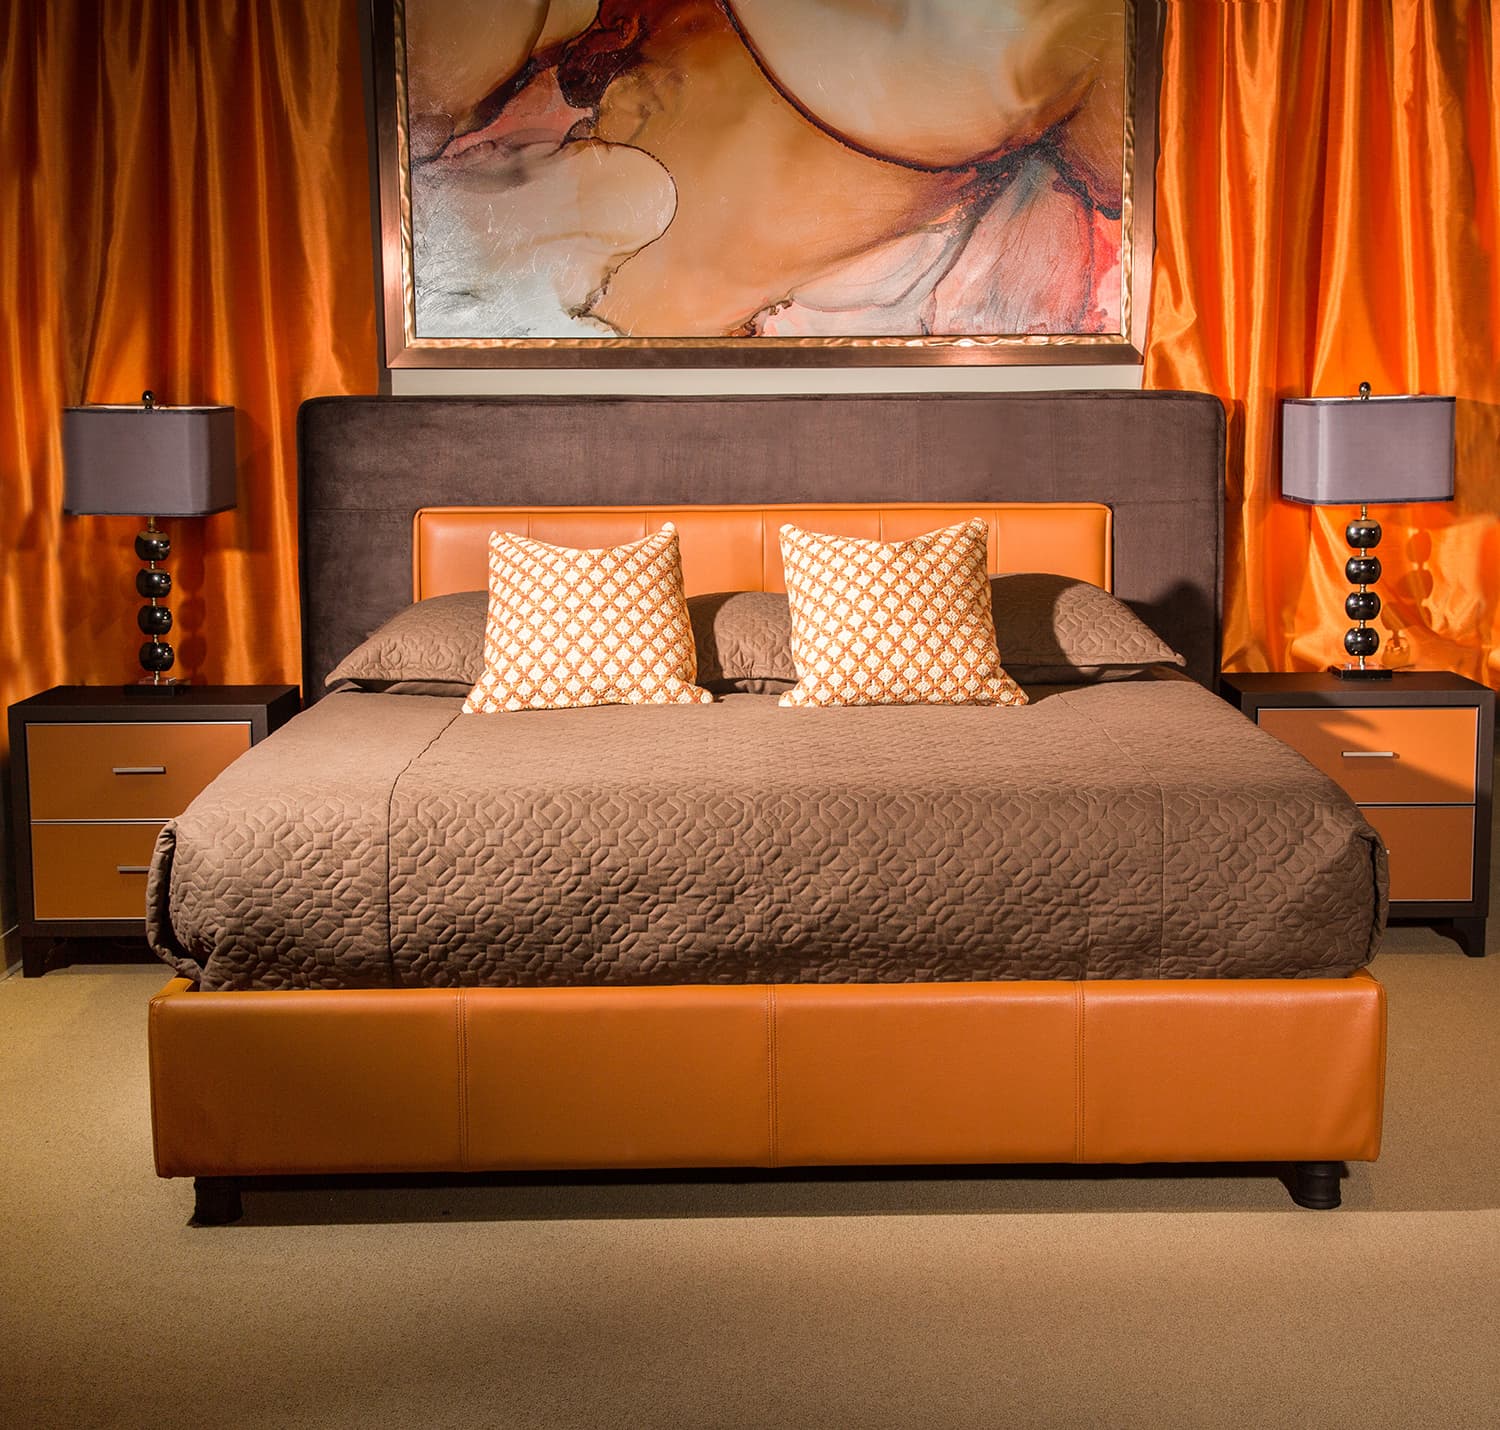 Orange collection. Оранжевая кровать. Оранжевая спальня. Оранжевая кровать в интерьере. Кровать оранжевая двуспальная.